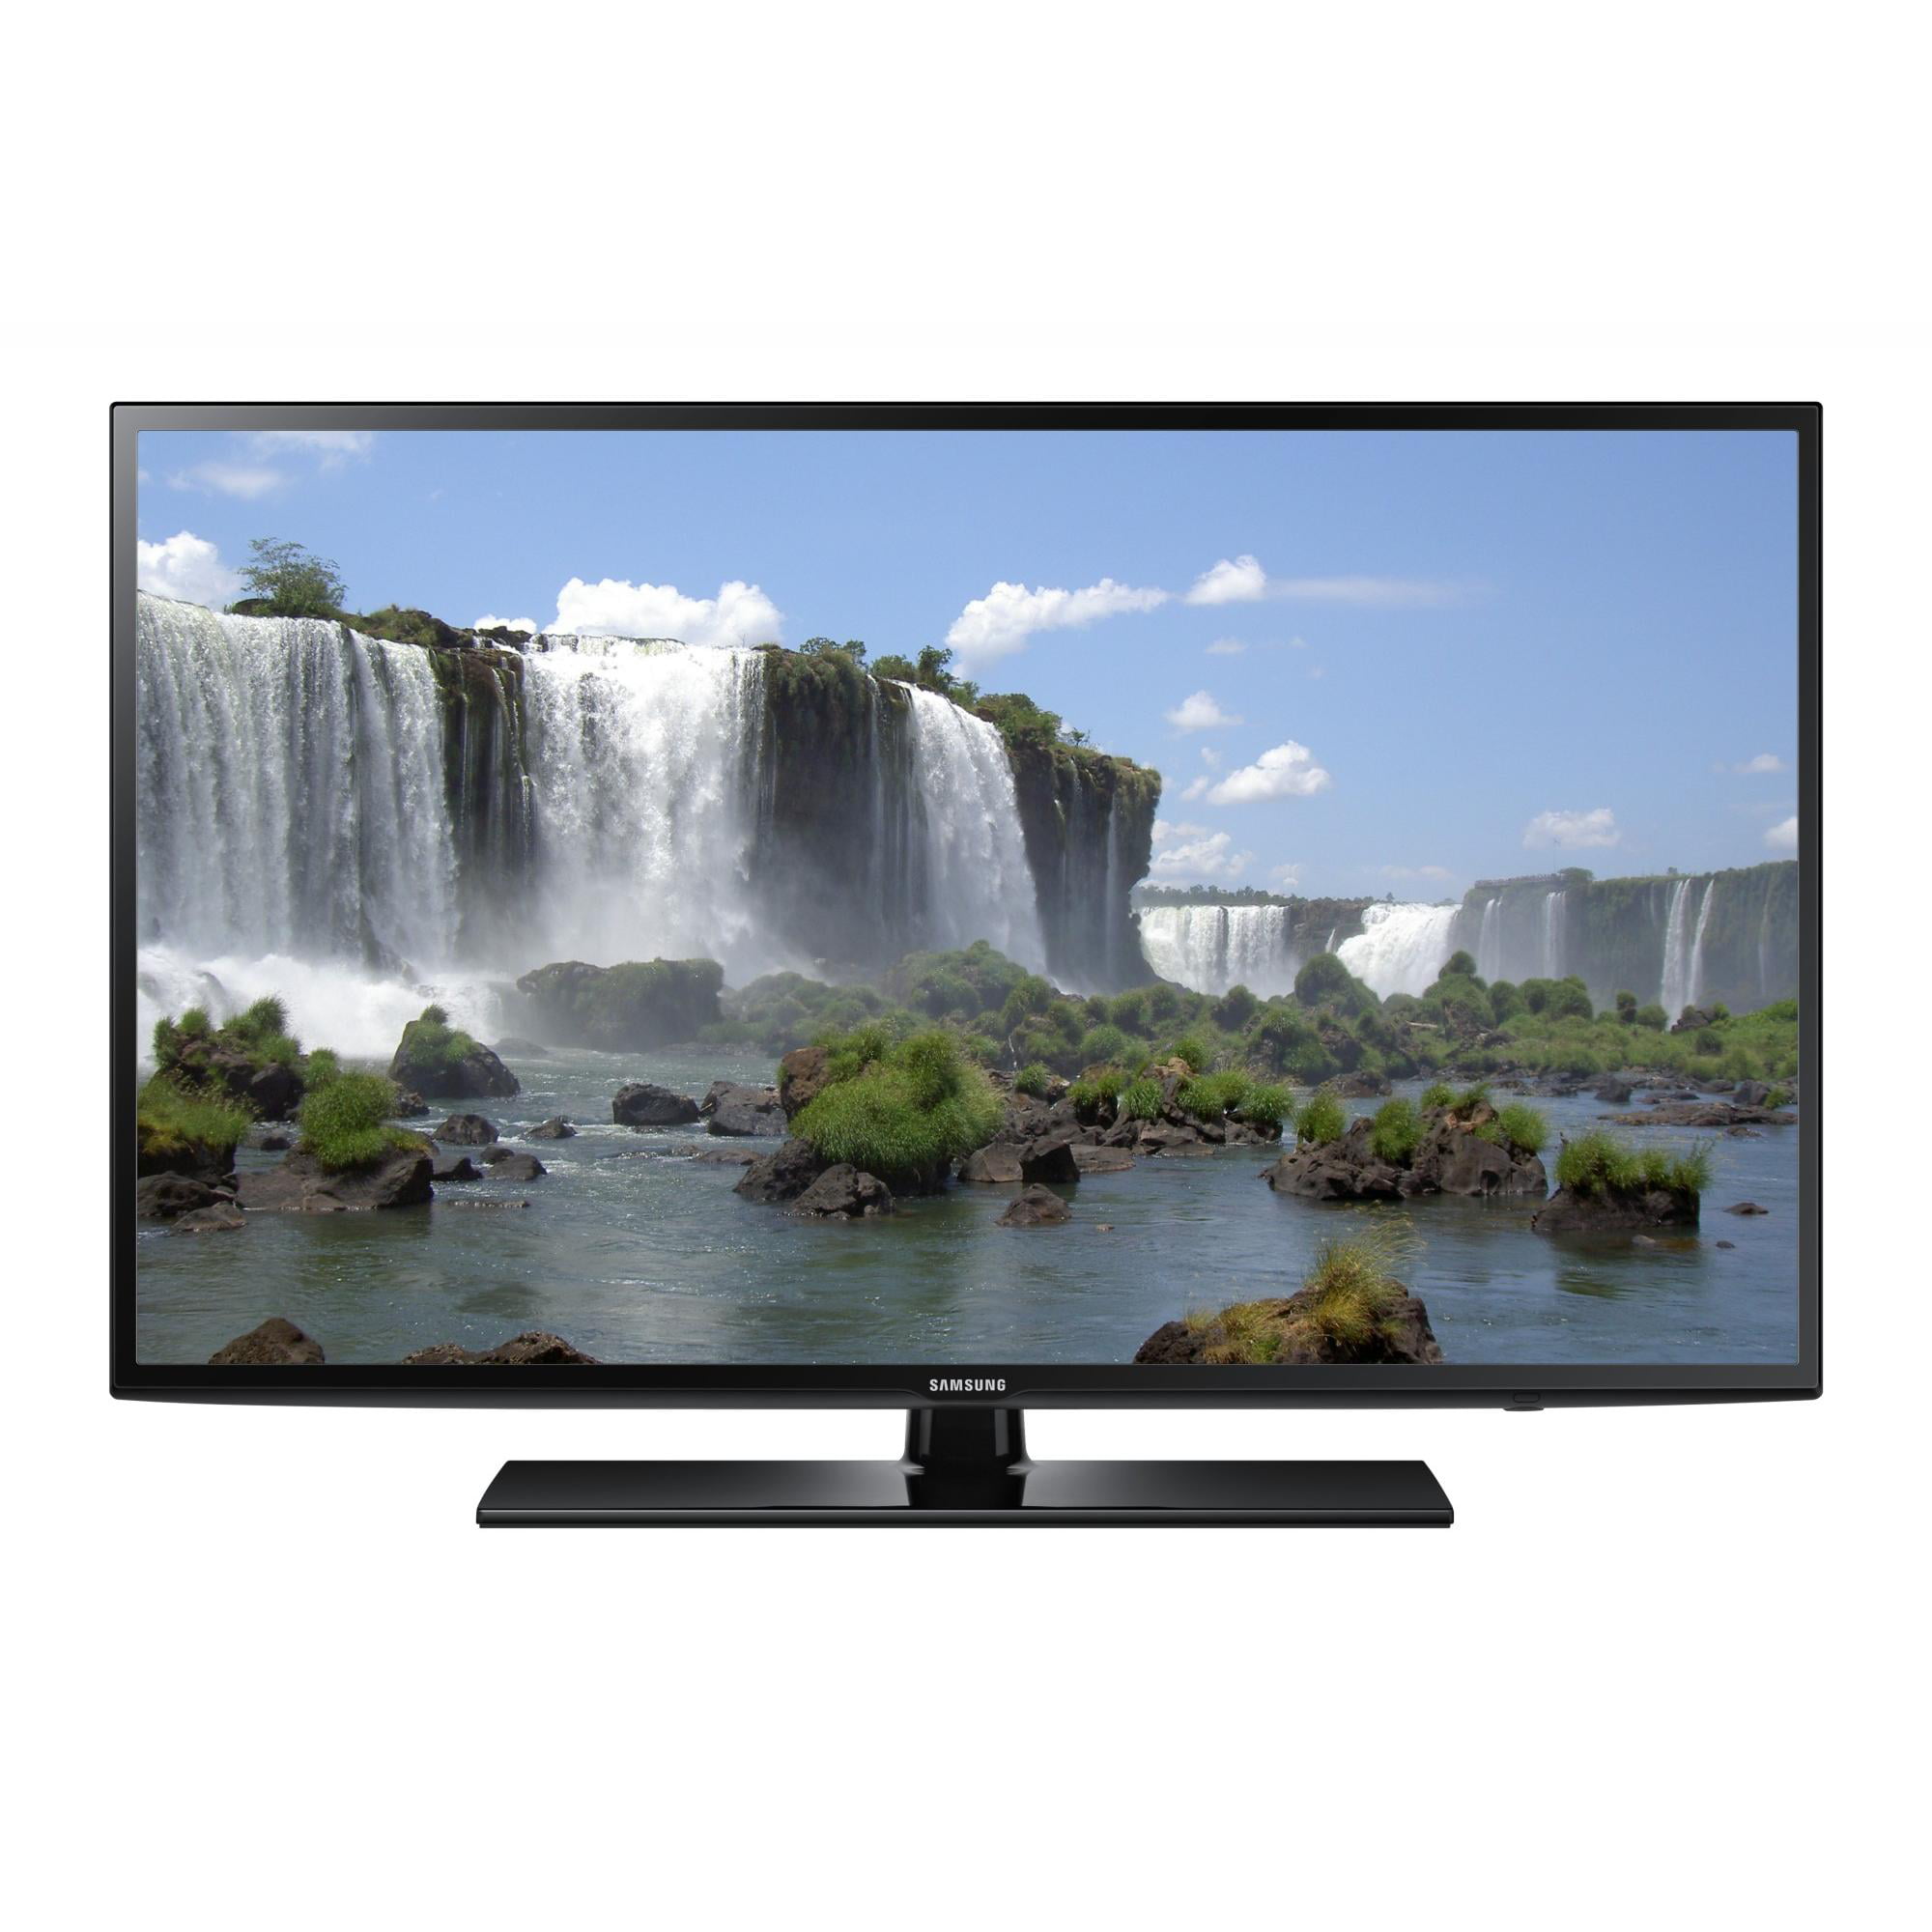 Samsung 40" Class (1080P) Smart LED TV (UN40J6200) - Walmart.com